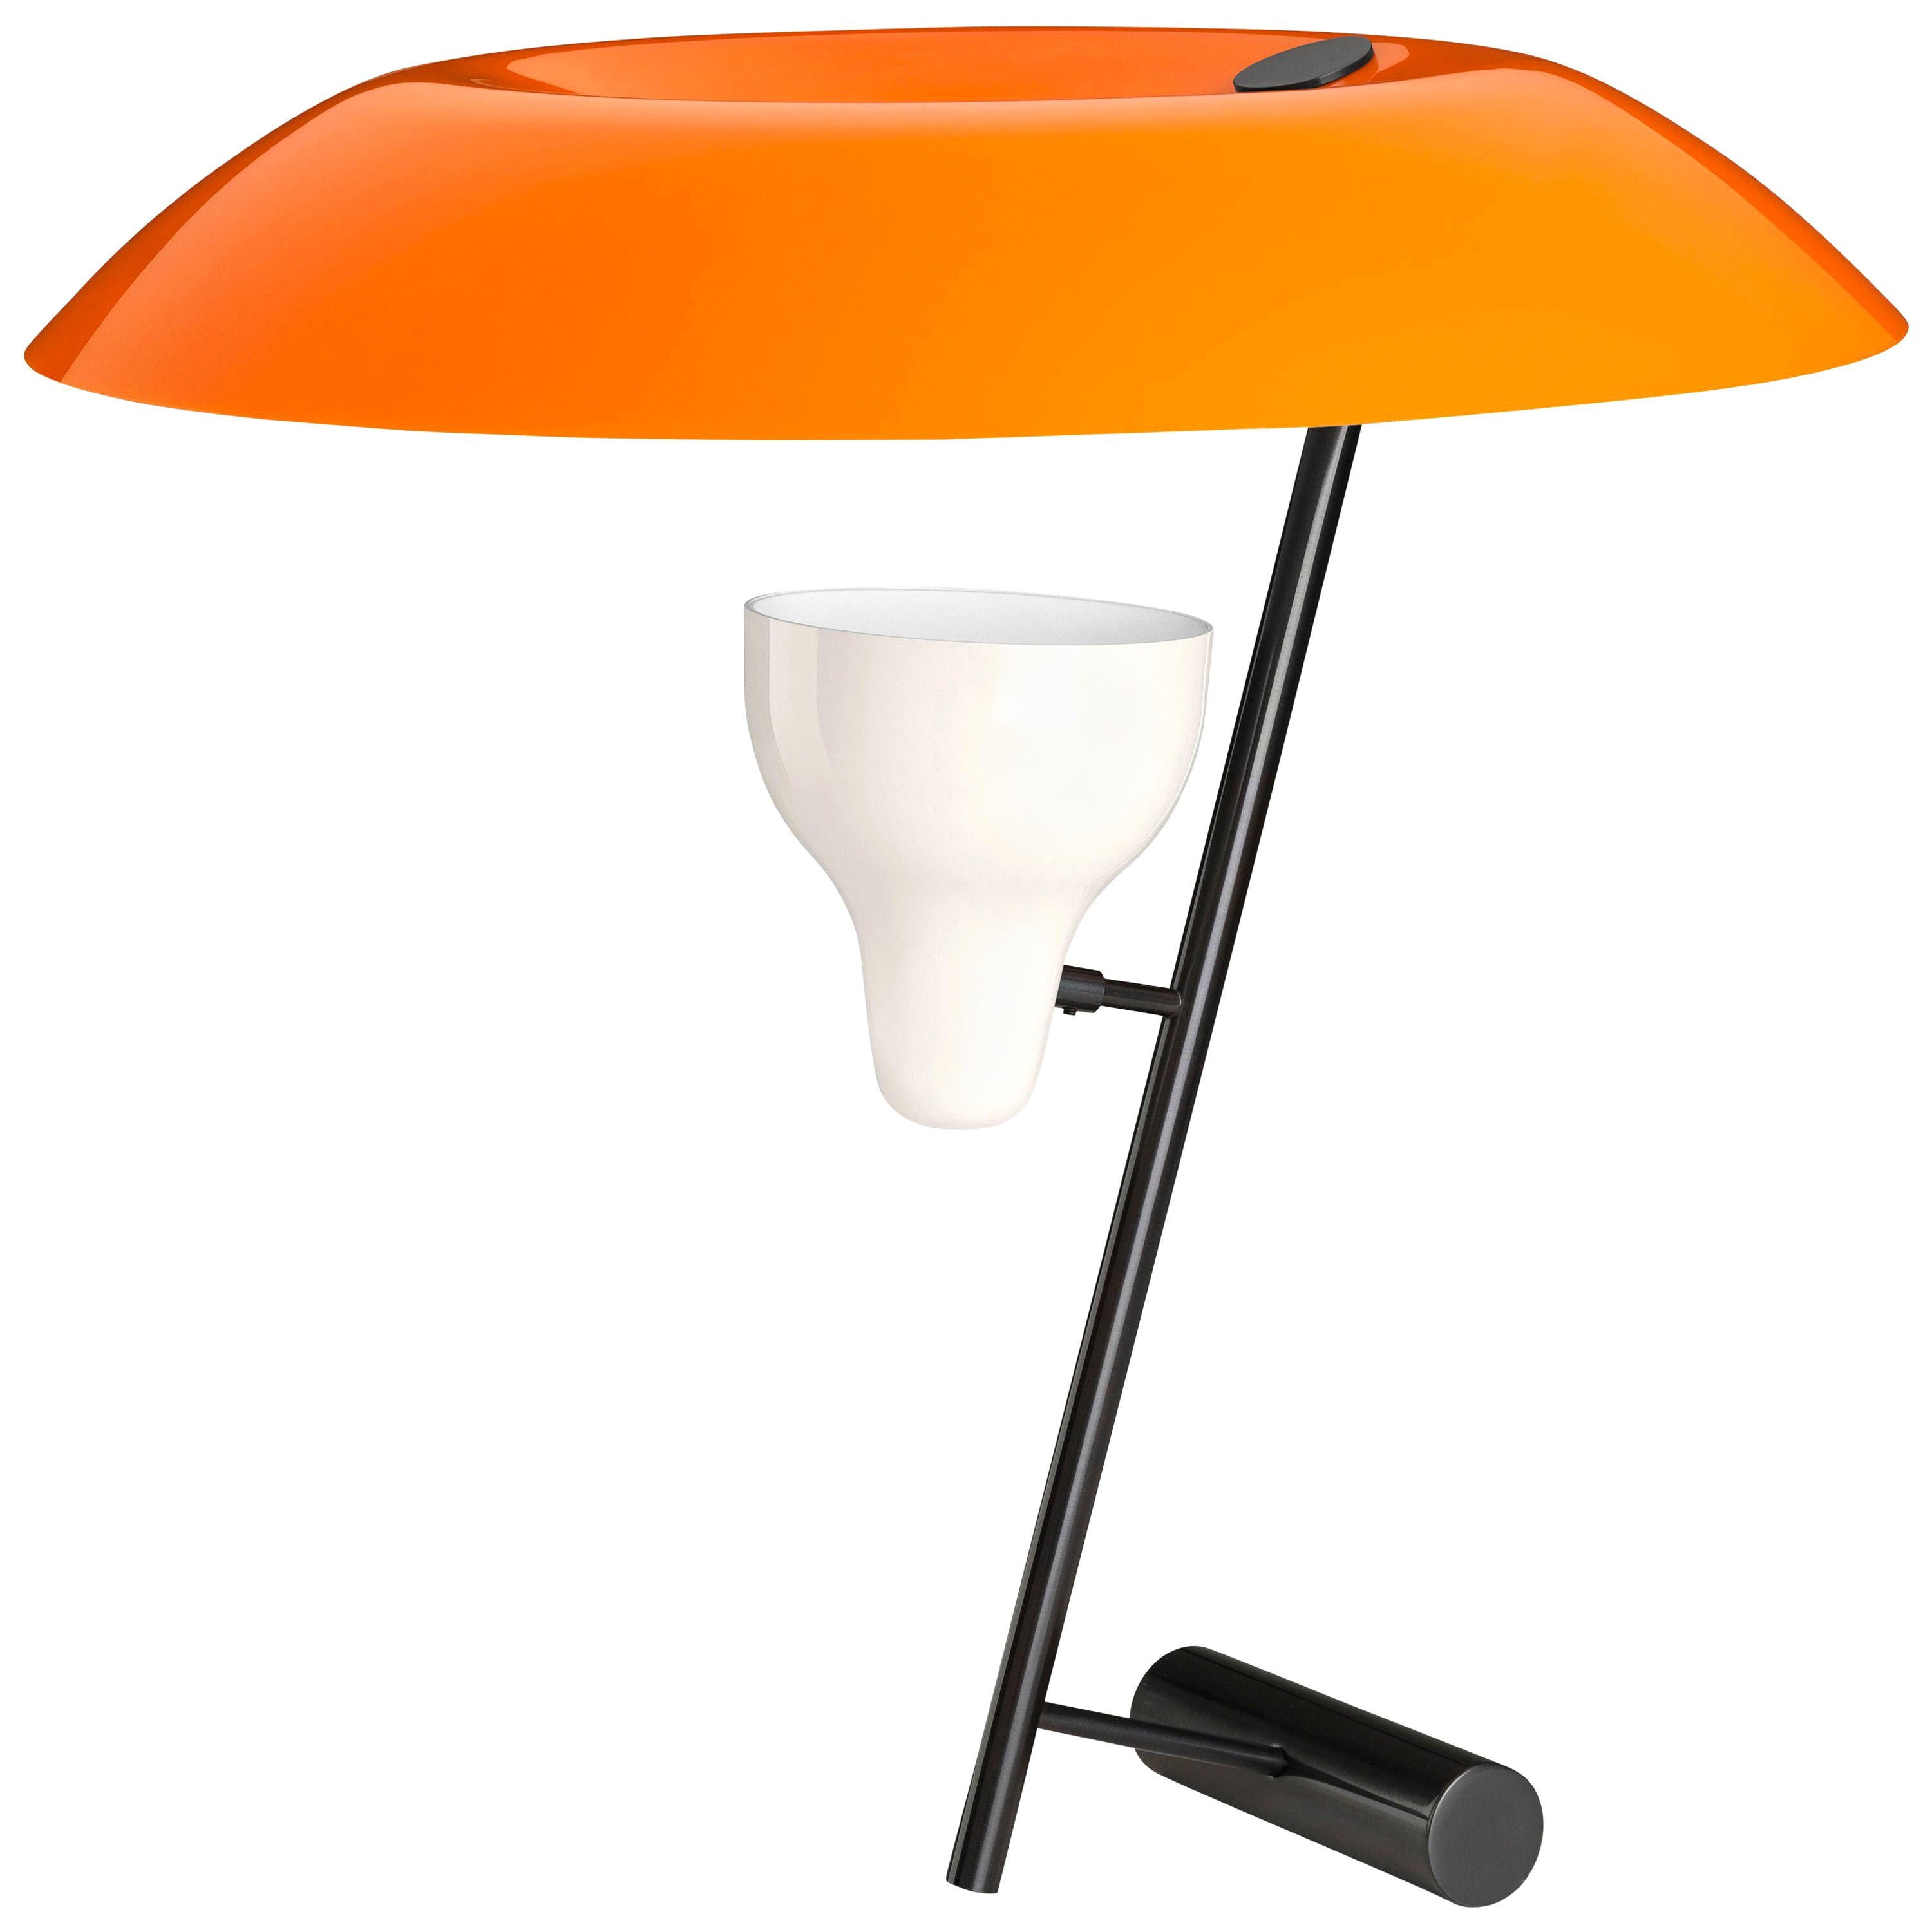 Gino Sarfatti Model #548 Table Lamp in Orange and Burnished Brass